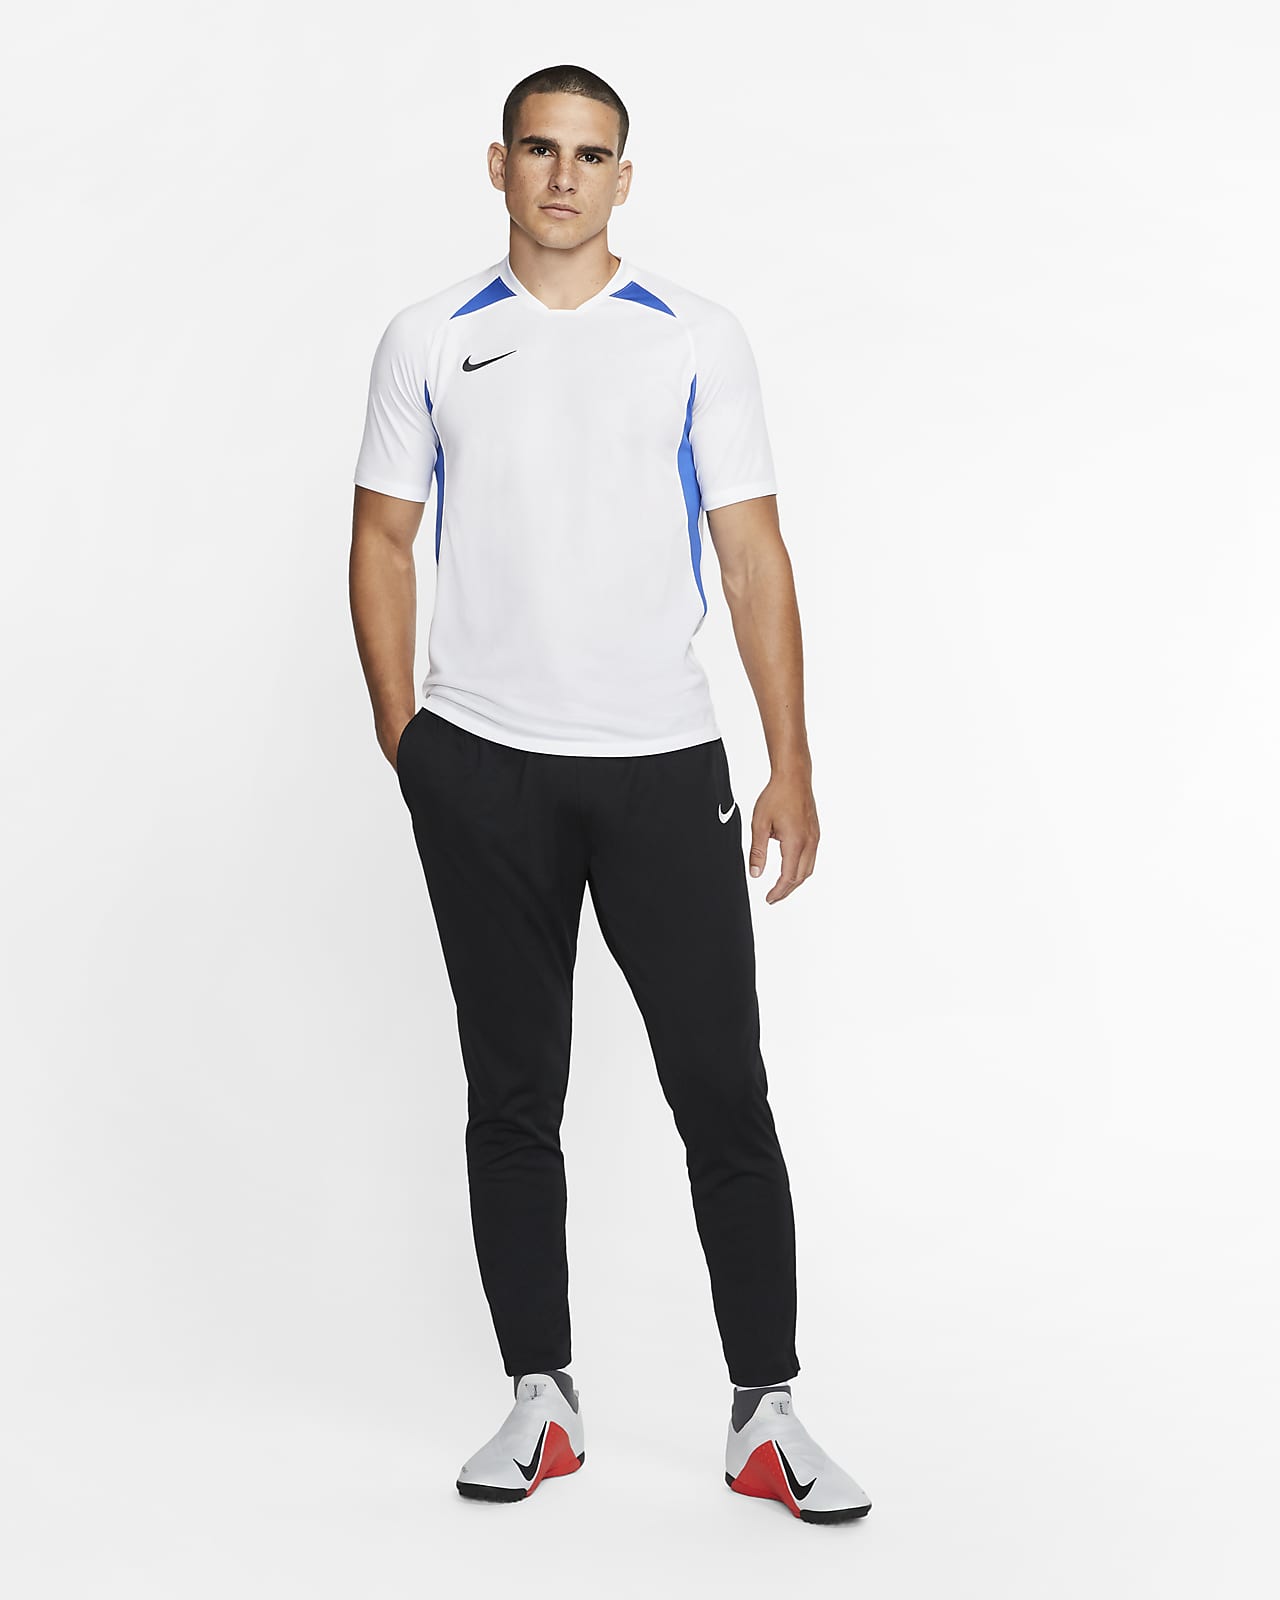 Nike公式 ナイキ Dri Fit レジェンド メンズ サッカーユニフォーム オンラインストア 通販サイト